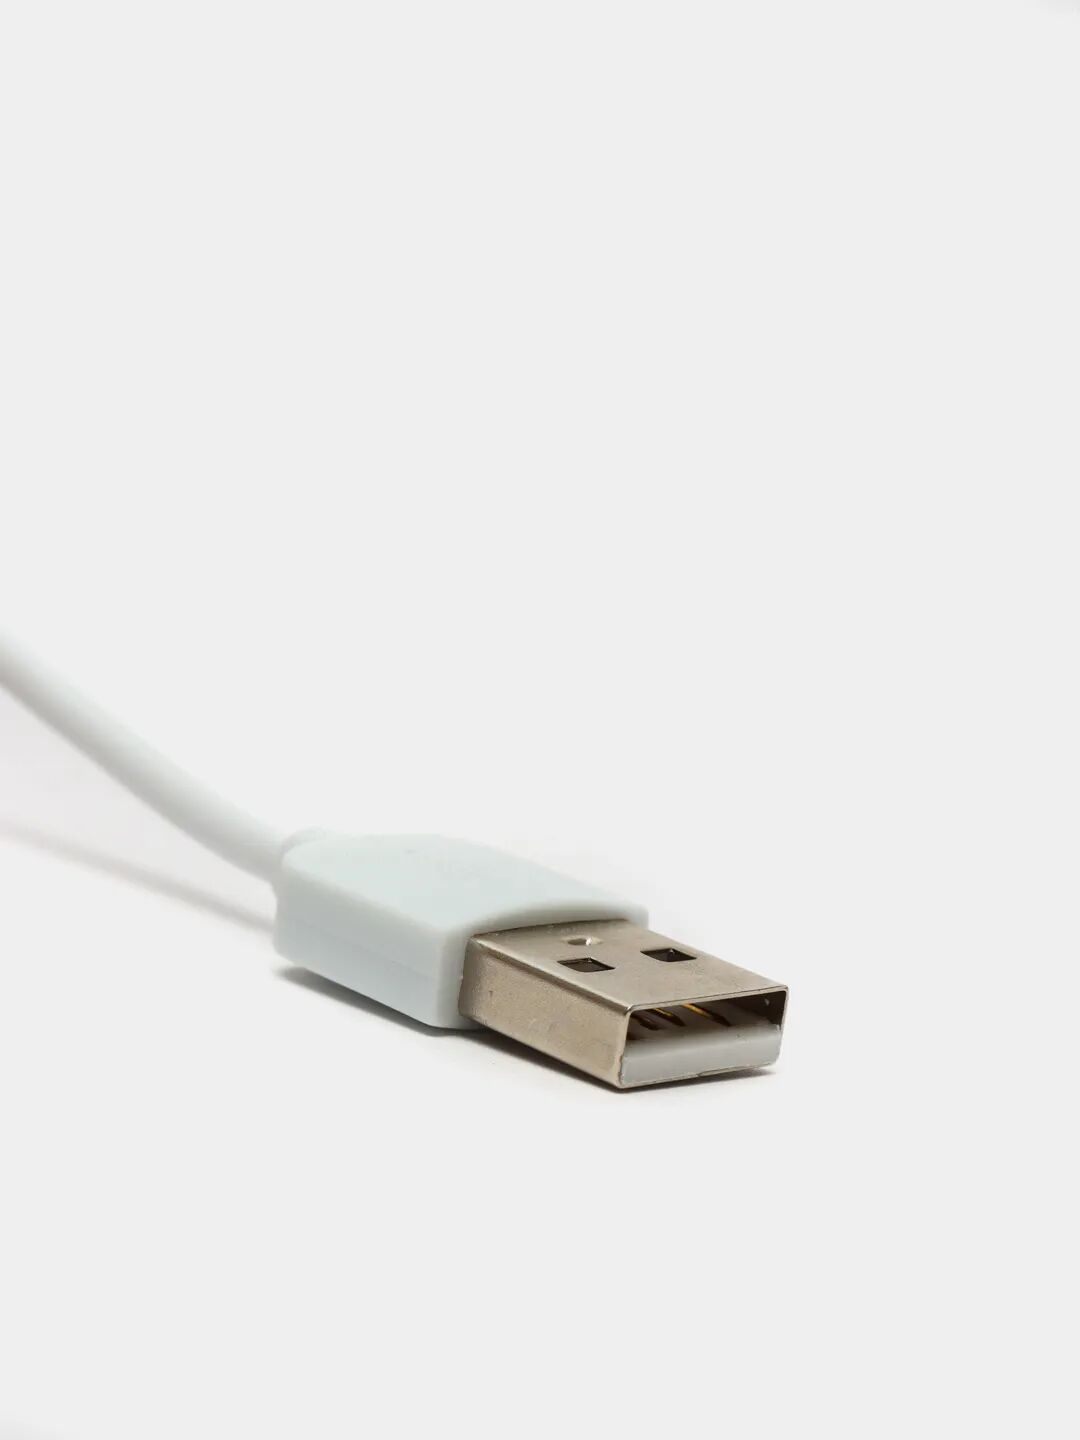 USB кабель HOCO X1 Rapid MicroUSB, 1м, PVC (белый) - 2